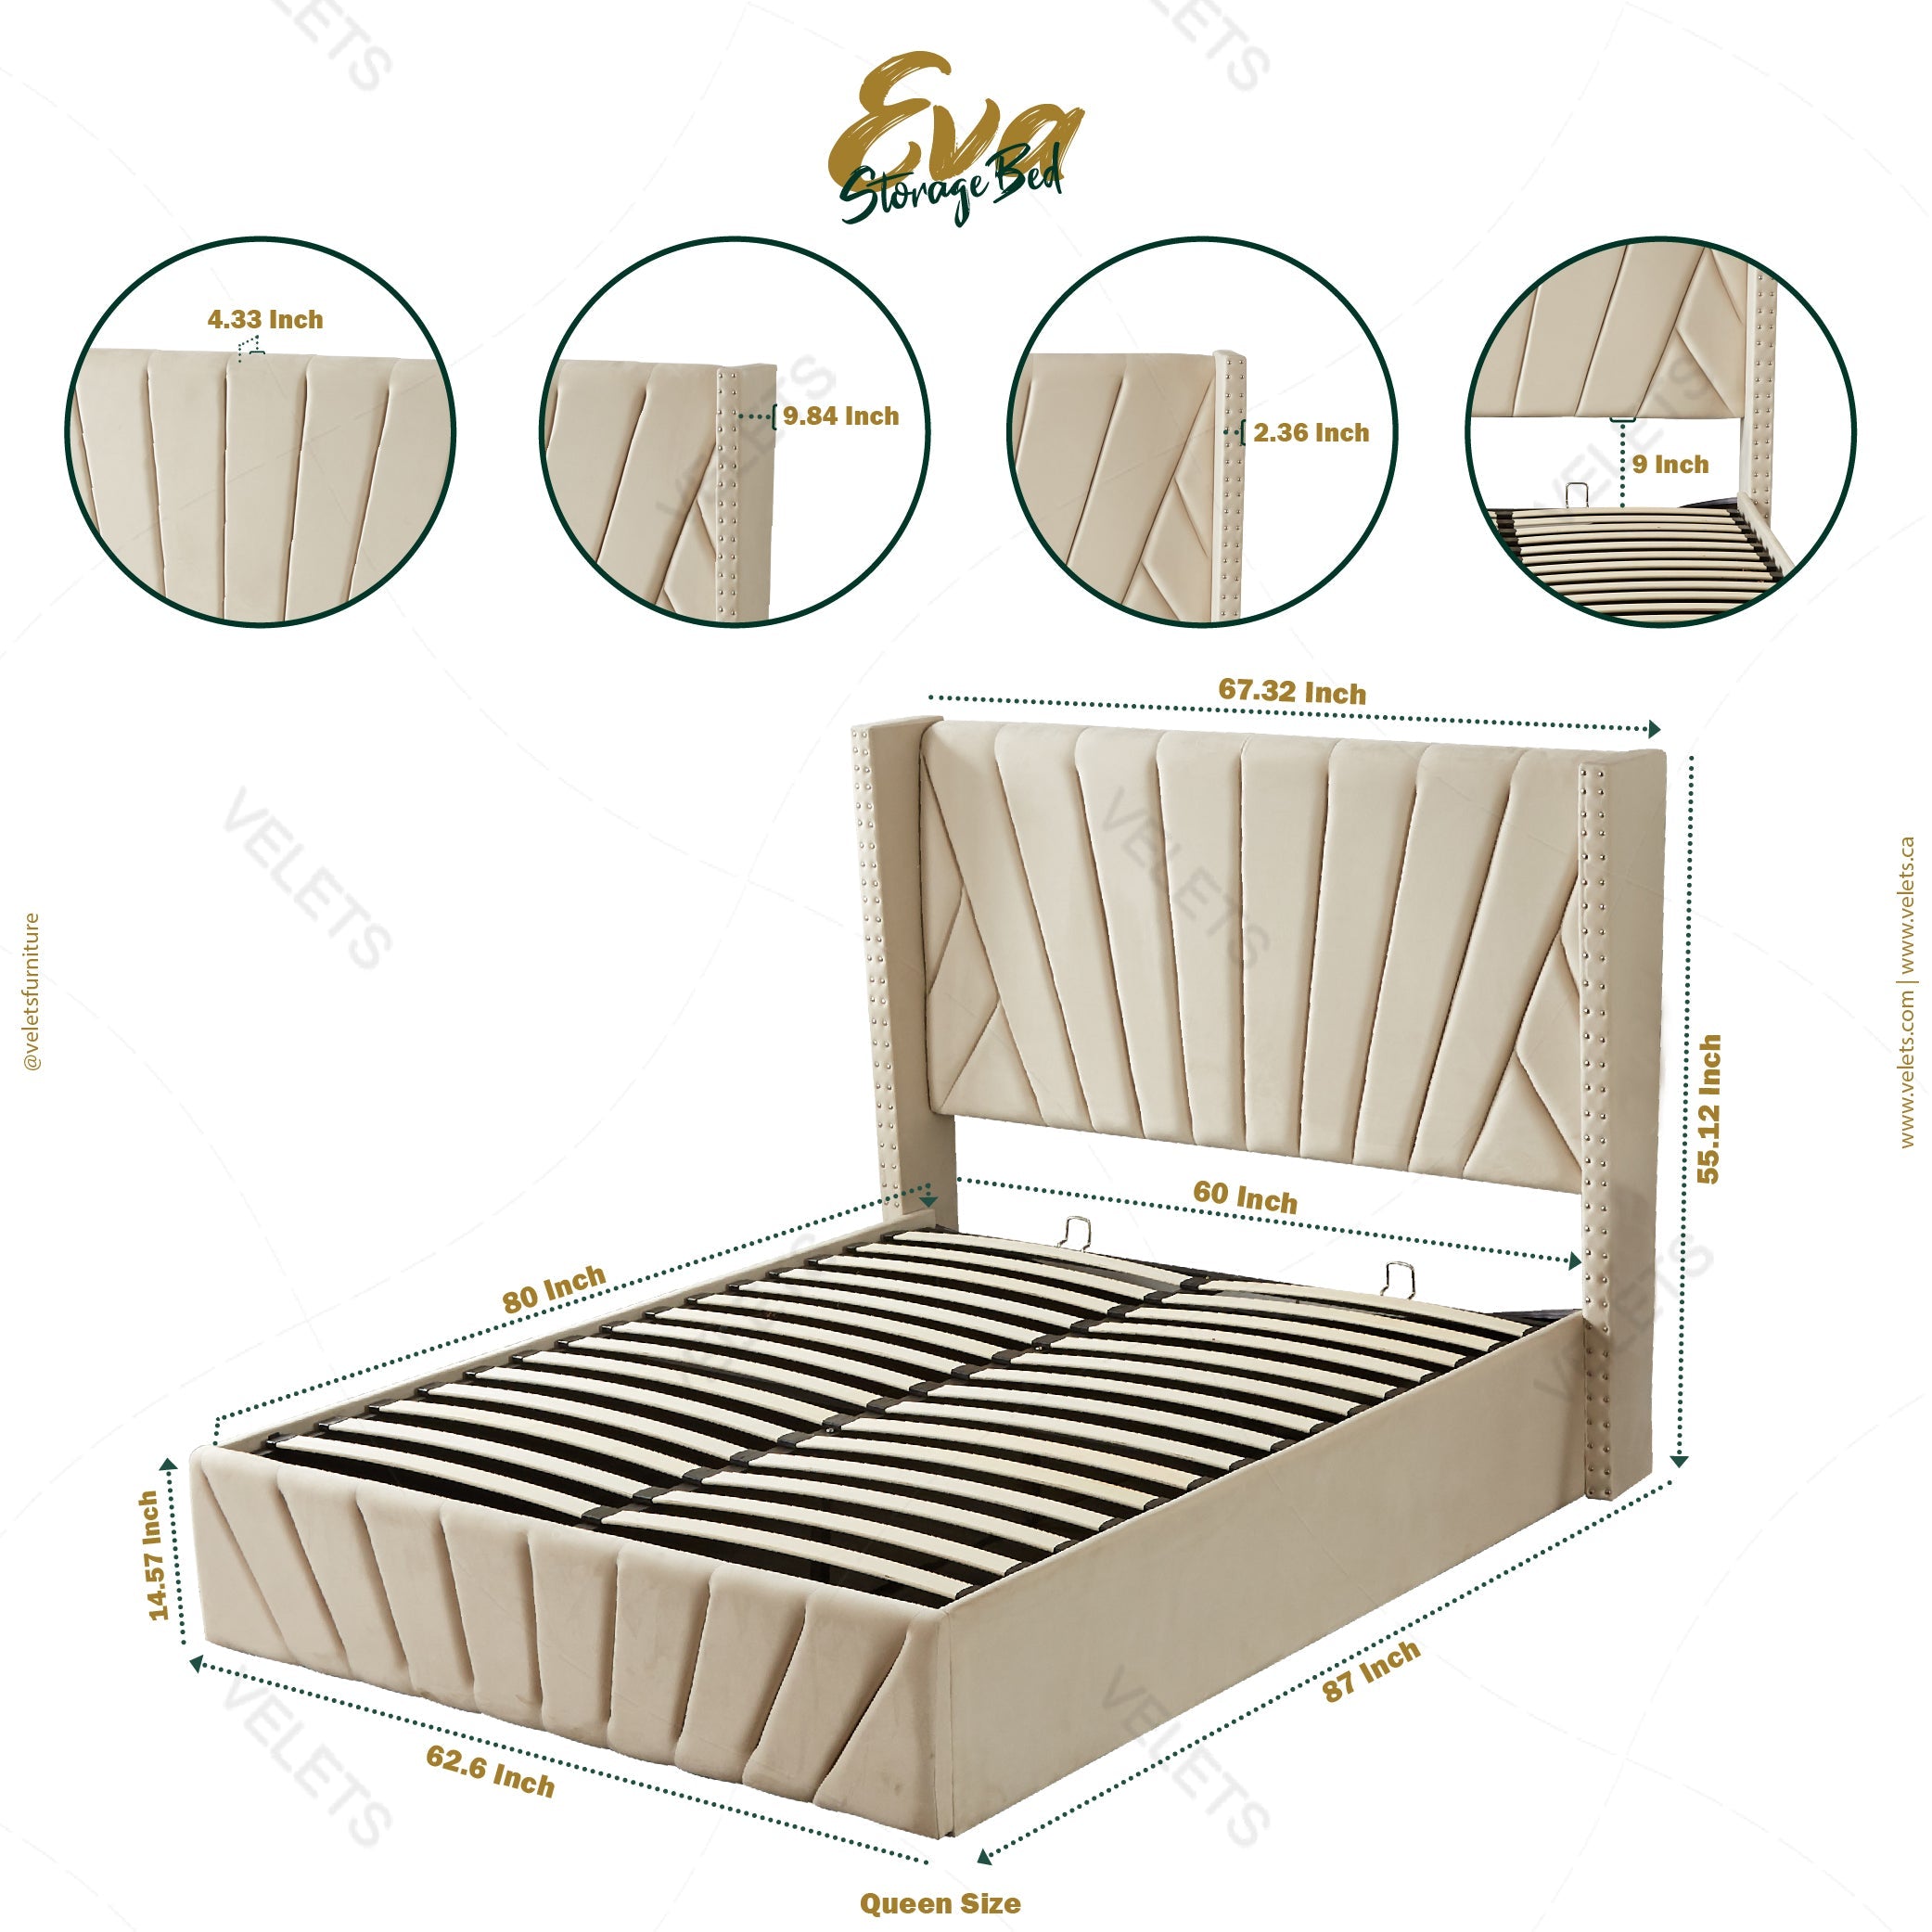 Velets Eva Contemporary Mid-Century Soft Padded Upholstered Platform Storage Bed Frame with Hydraulic Gas Lift Storage - Solid Wood Frame, Wood Slat System & Smart Hydraulic Under-Bed Storage - Light Gray